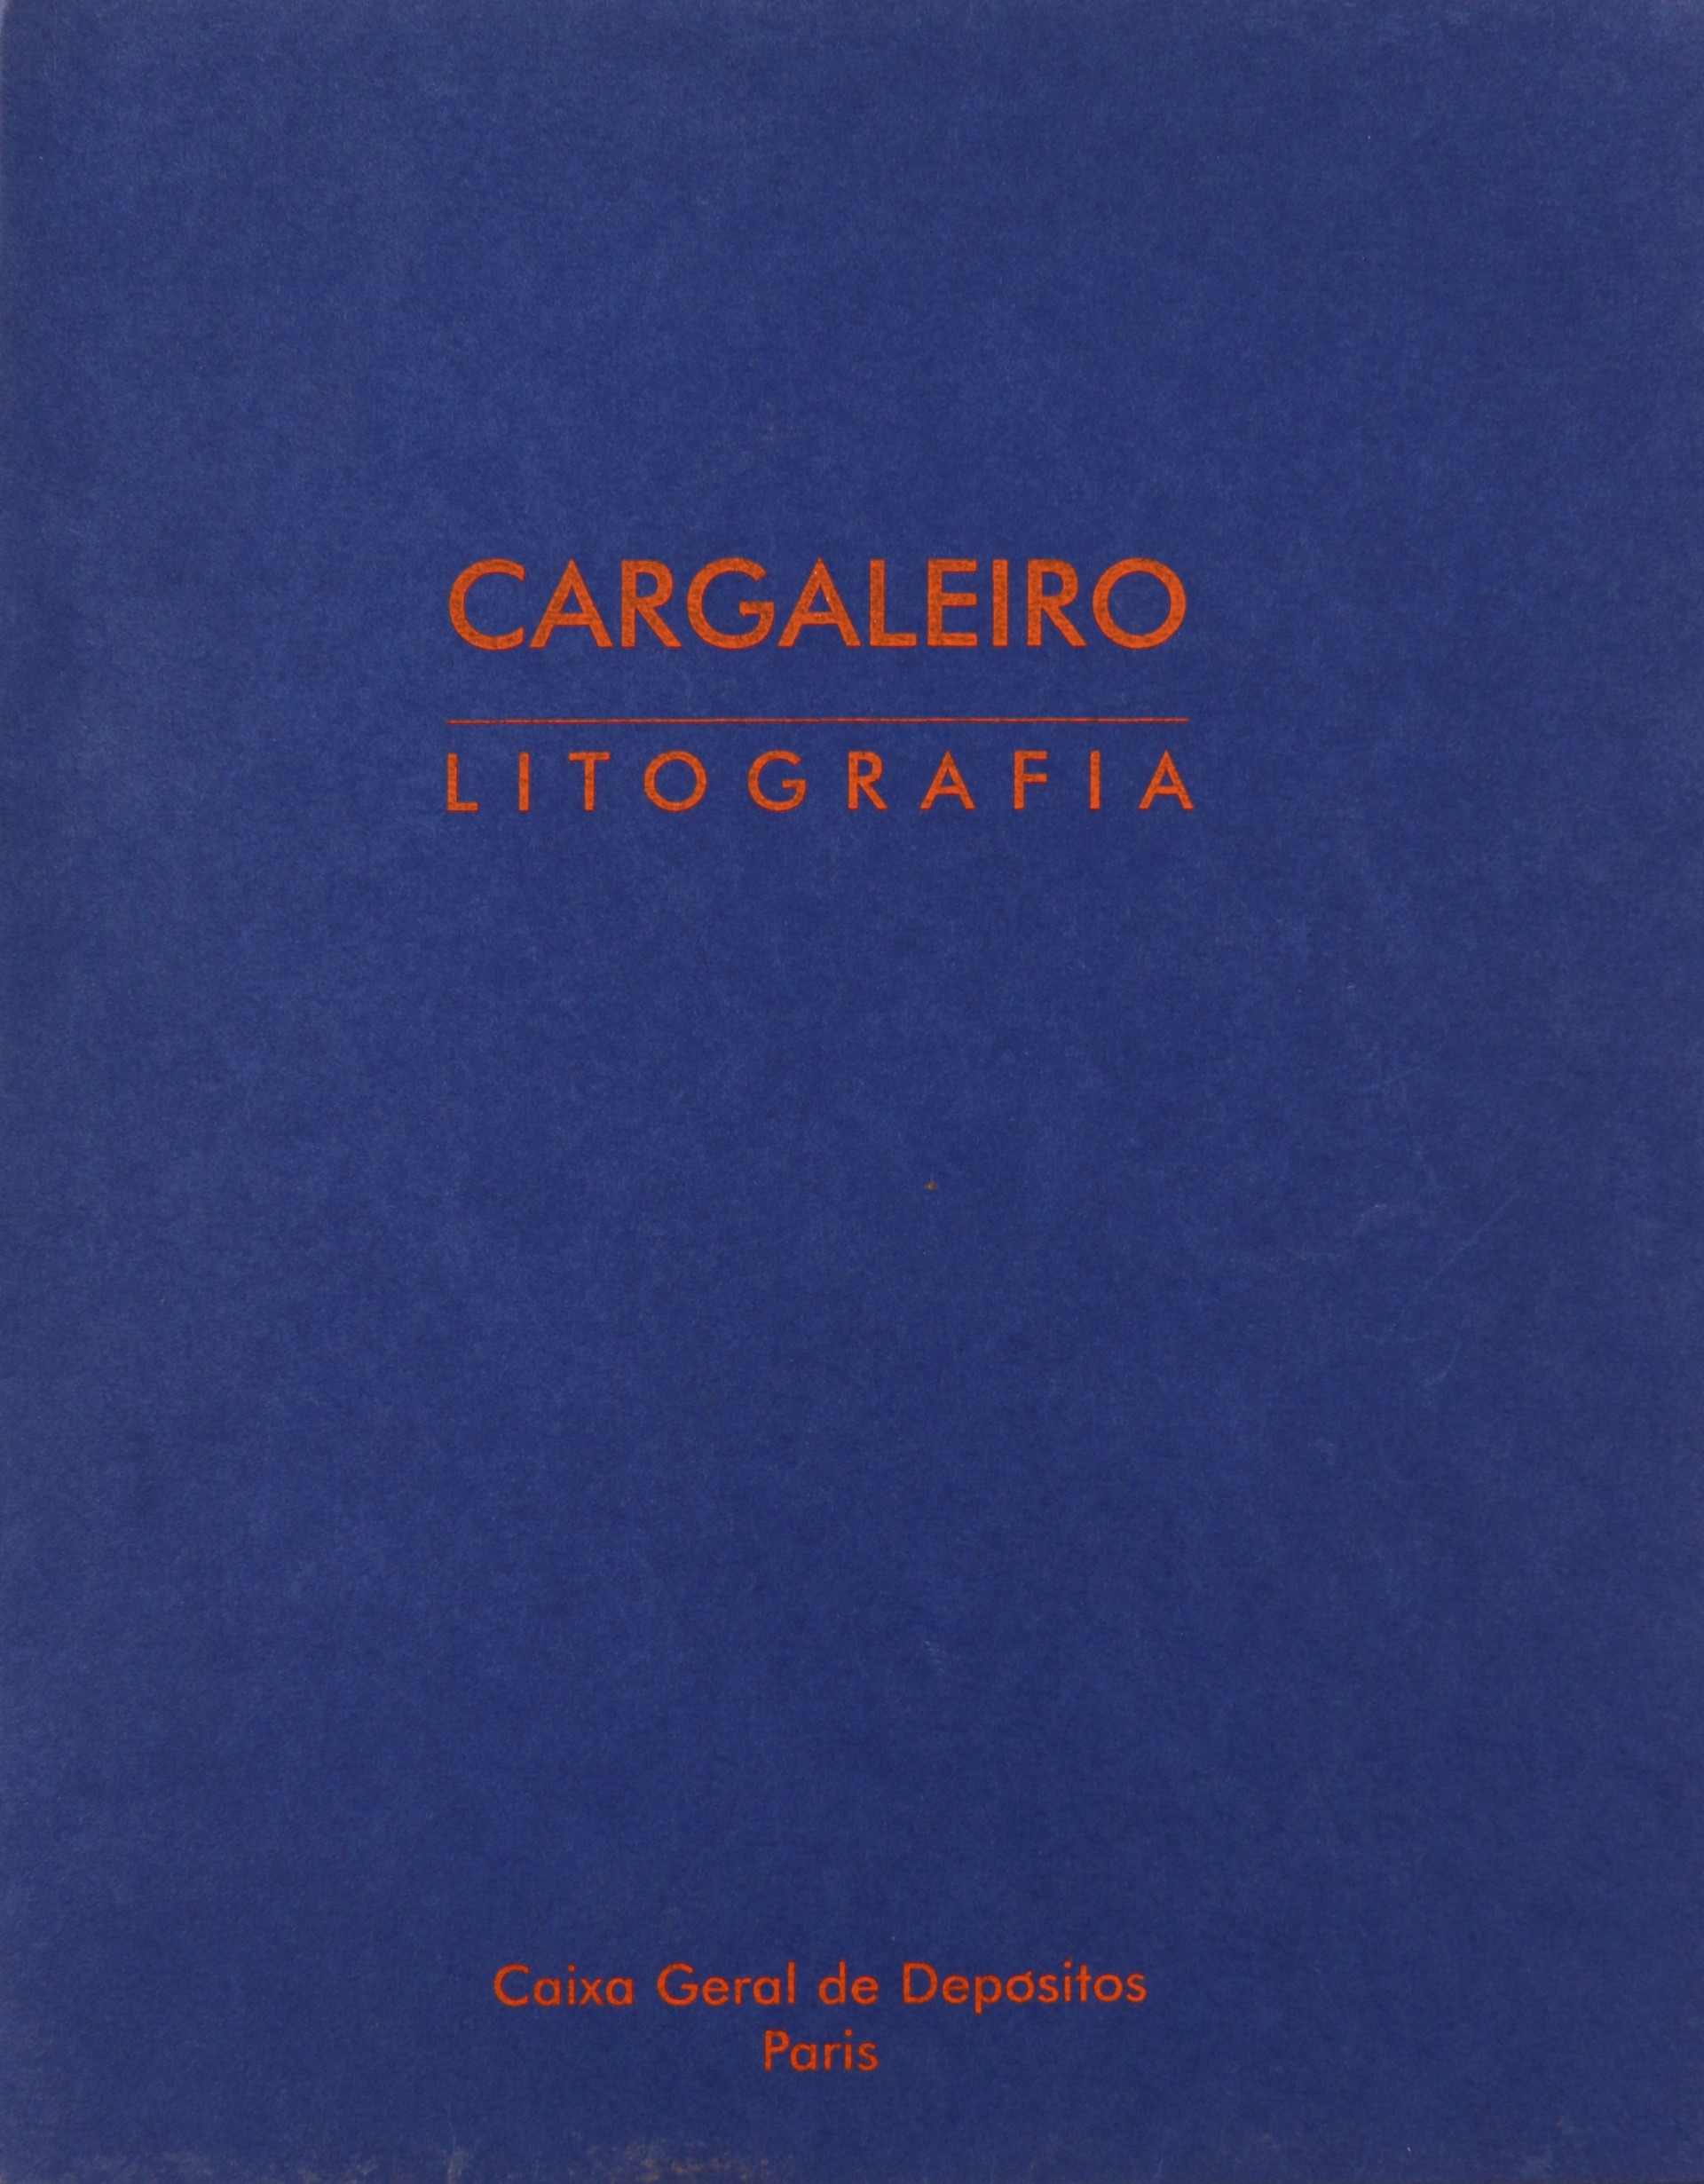 MANUEL CARGALEIRO (1927)